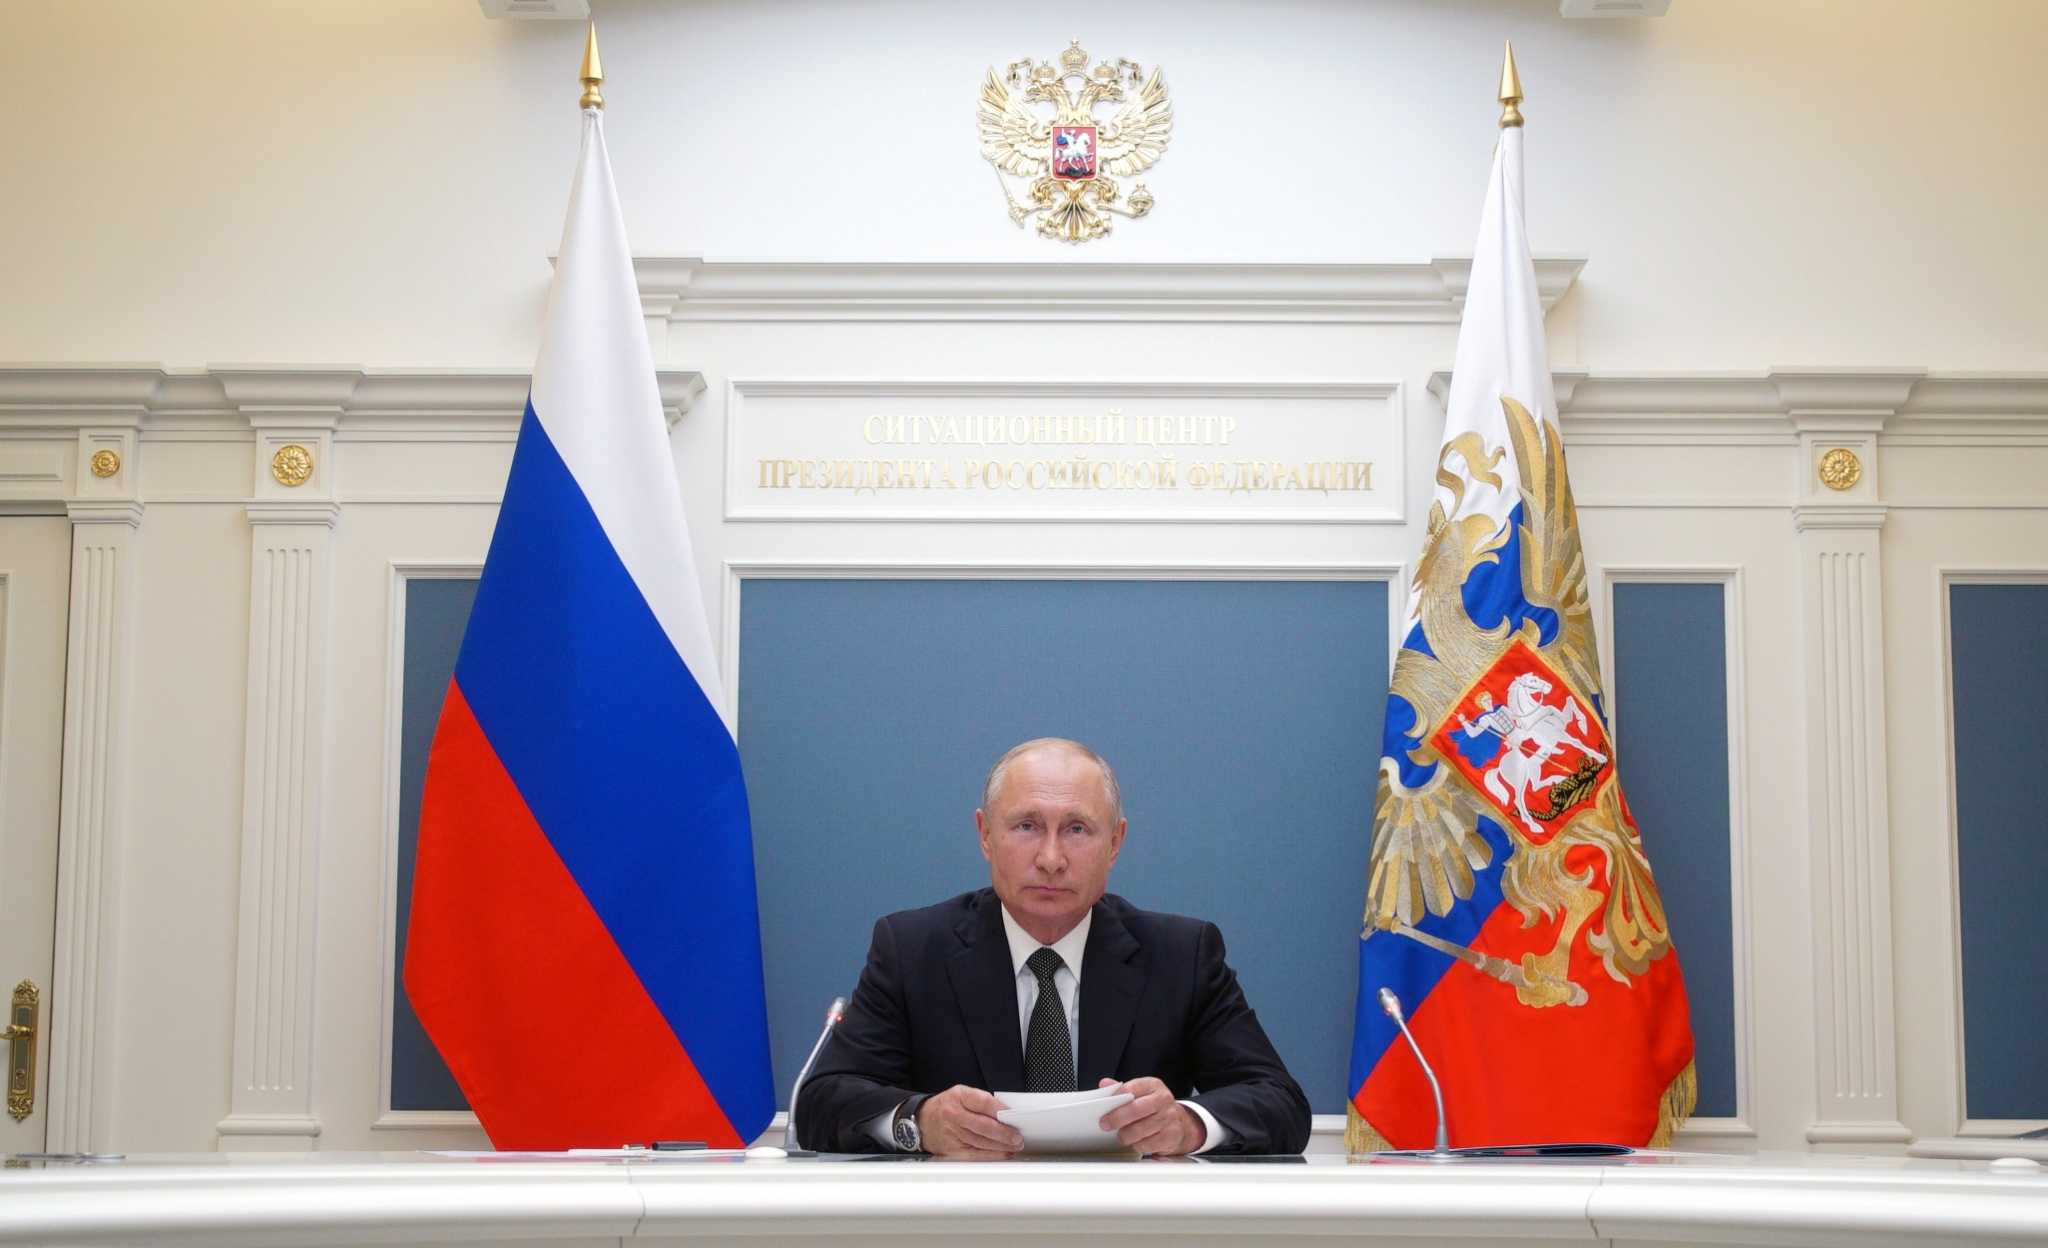 Putin Kremlin Reuters 06 07 2020 2048x1248 1